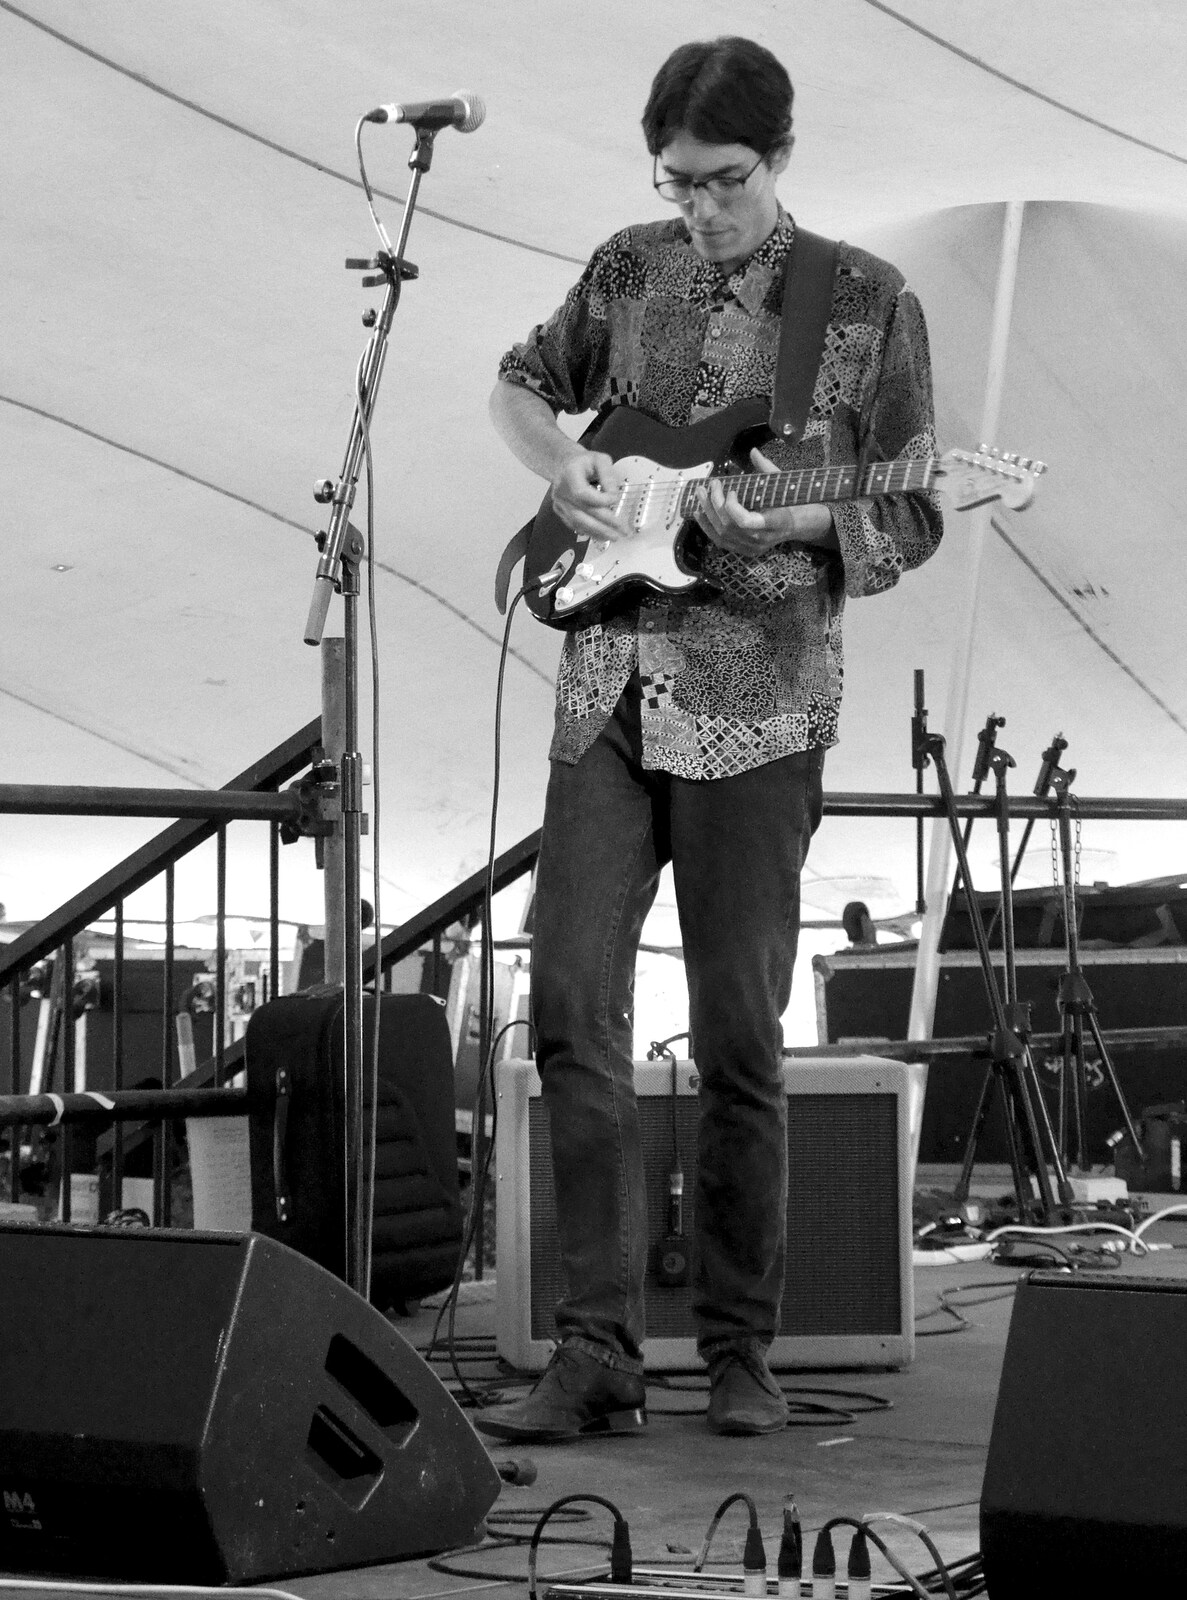 Sam plays guitar from The 8th Latitude Festival, Henham Park, Southwold, Suffolk - 18th July 2013